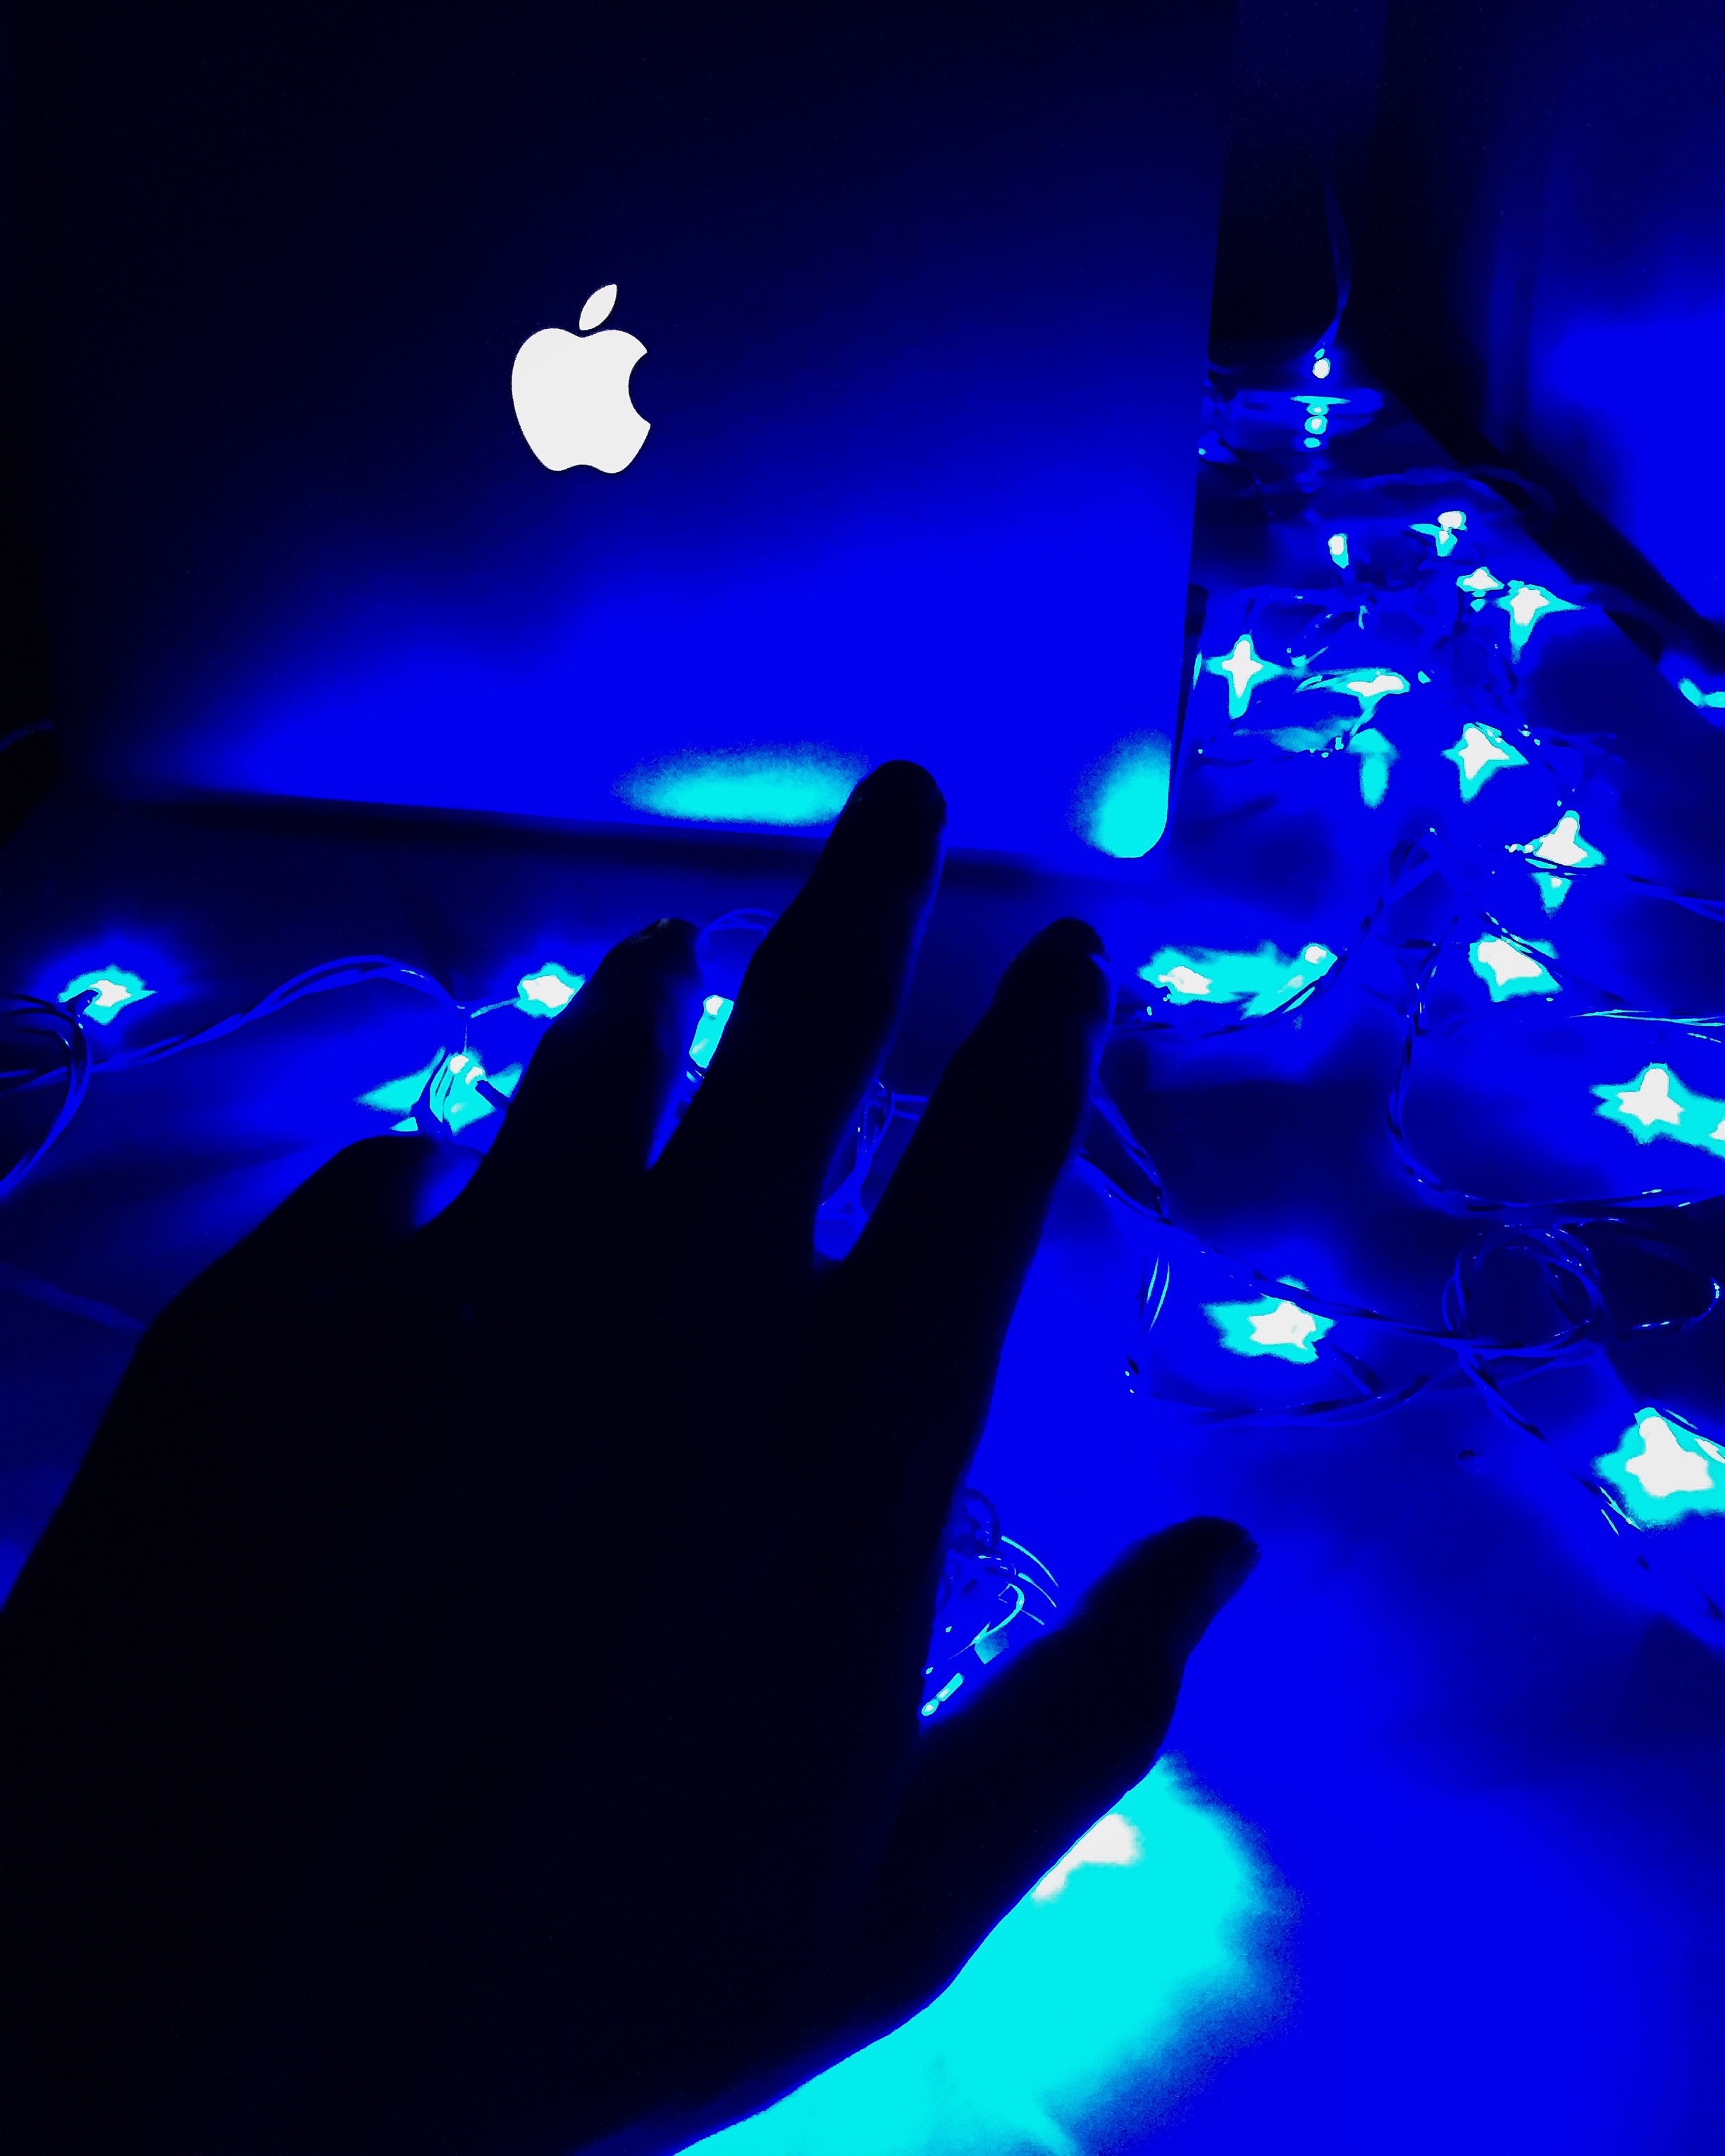 Silhouette of Human Left Hand, Blur, Energy, Hand, Illuminated, HQ Photo